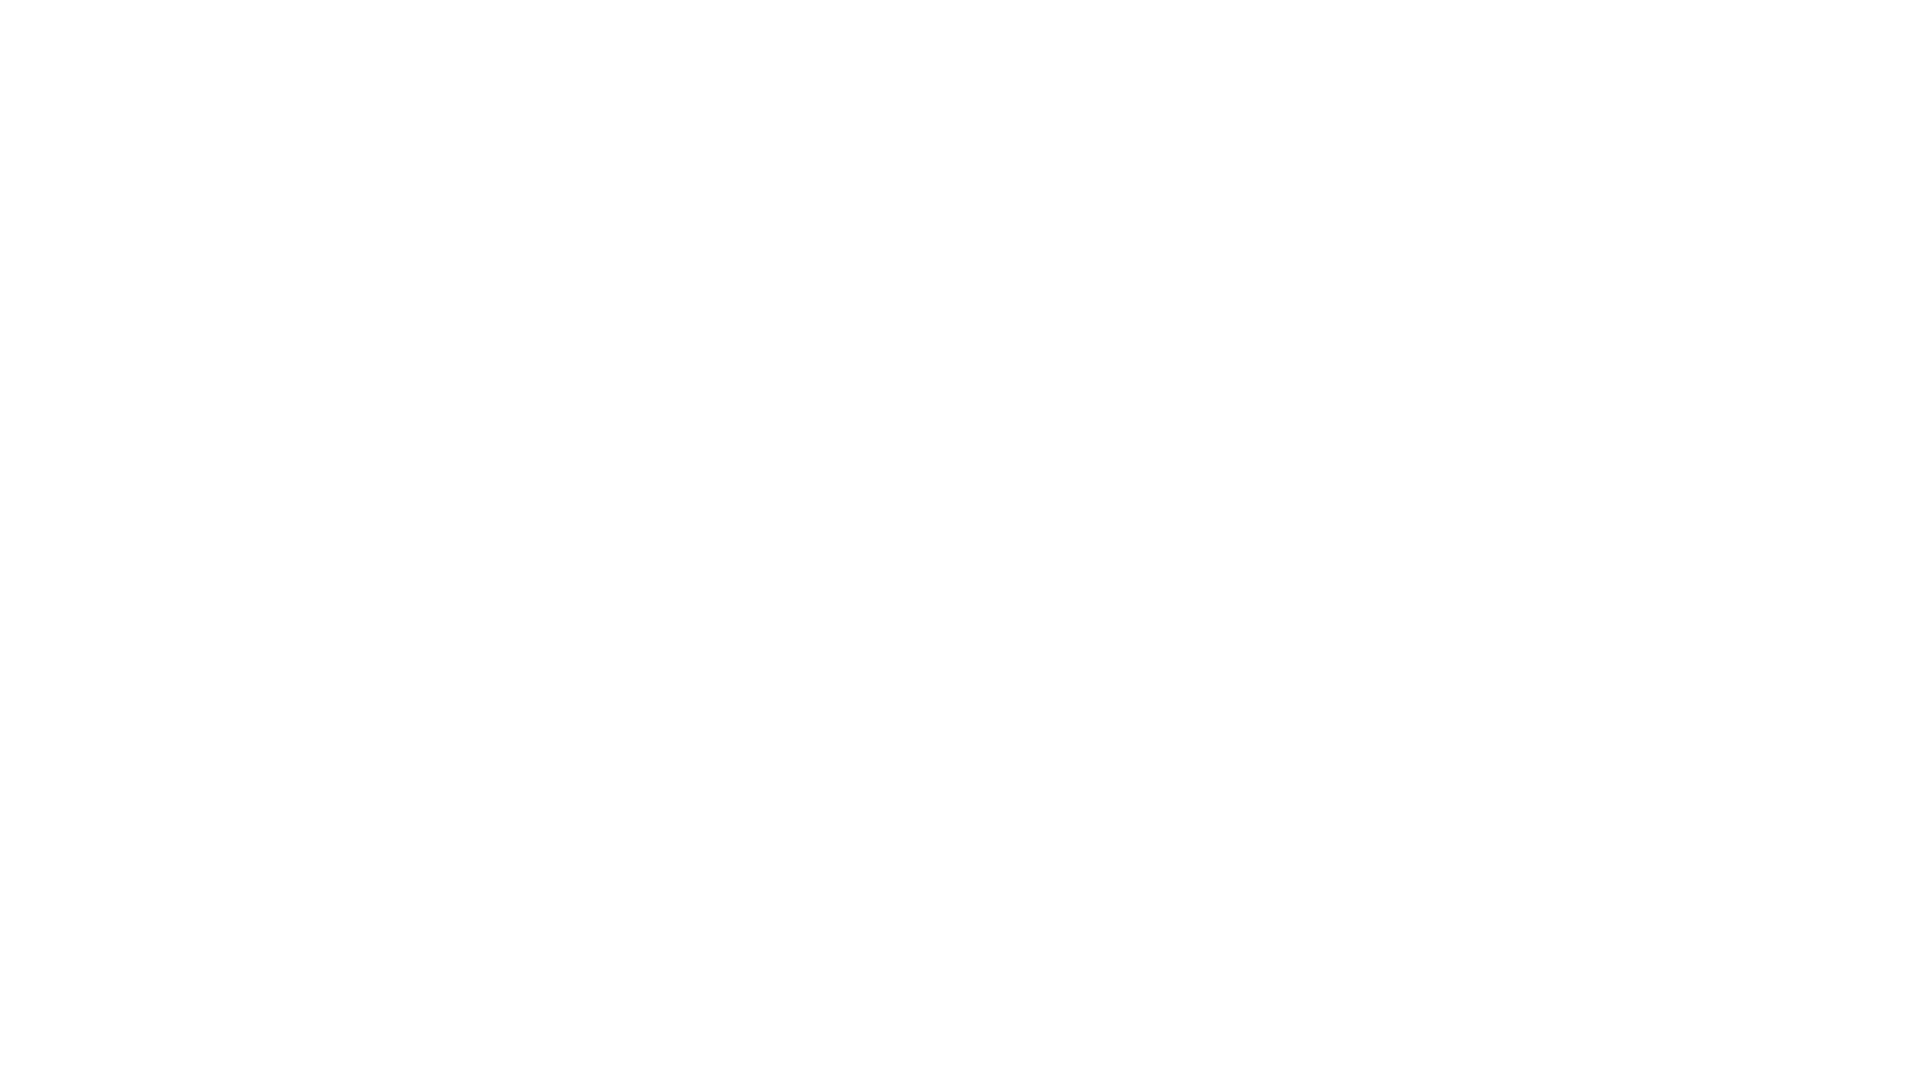 Watch American Dad